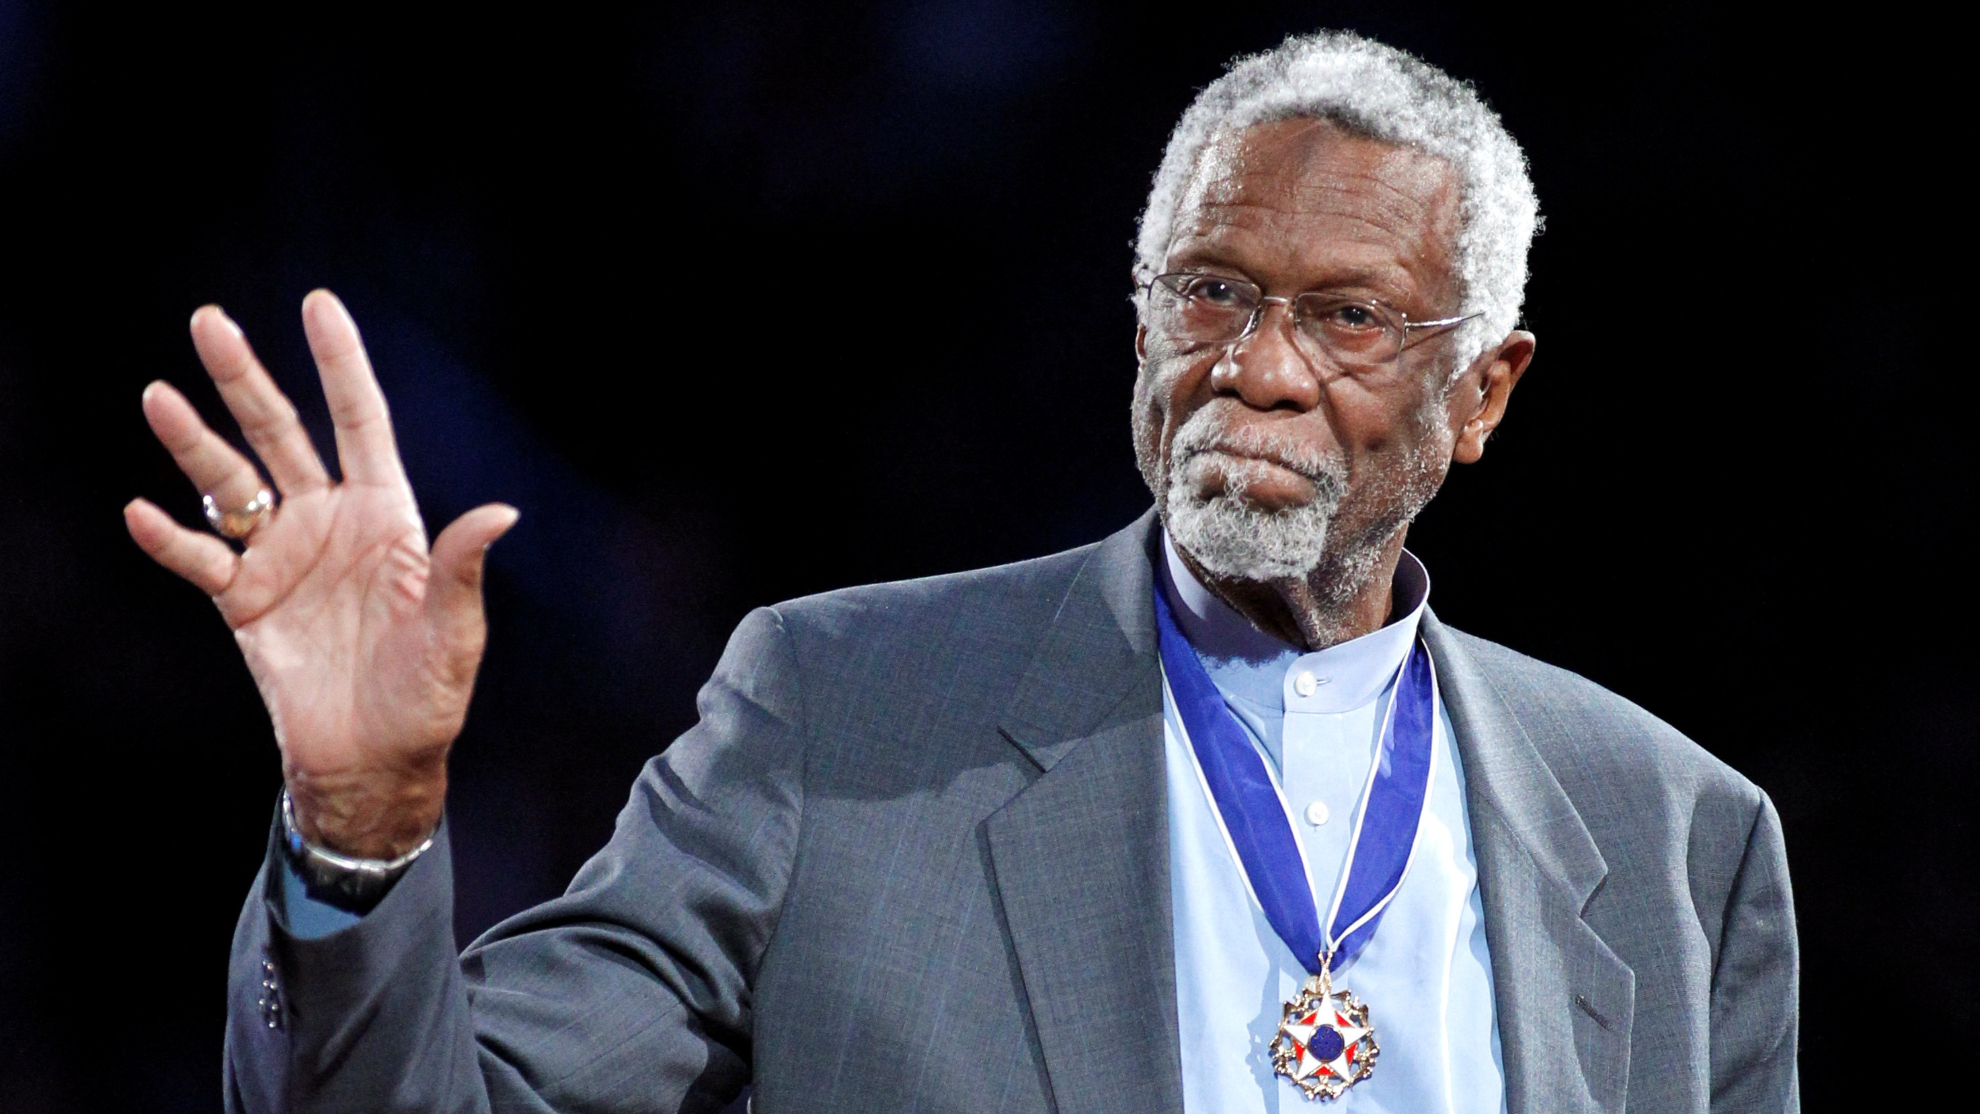 Jordan: "Bill Russell allanó el camino para los jugadores negros"